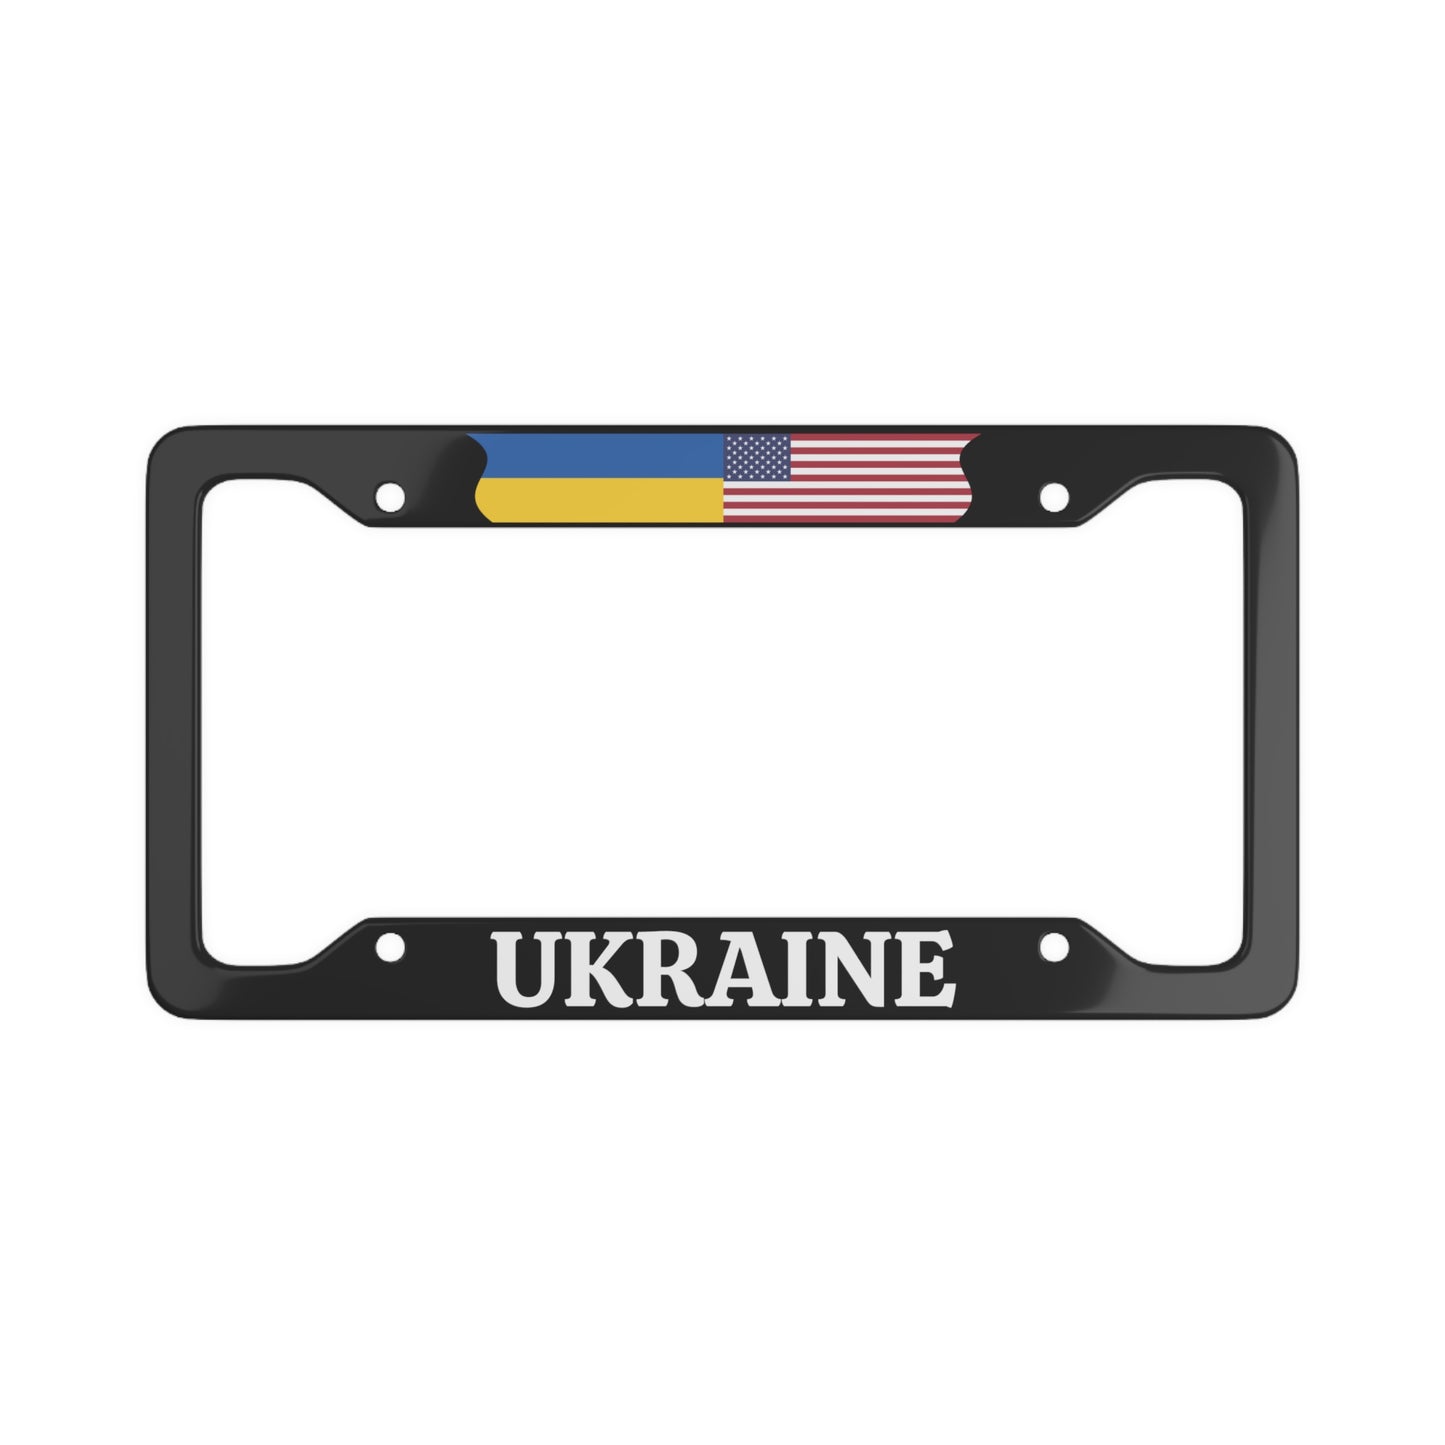 UKRAINE License Plate Frame